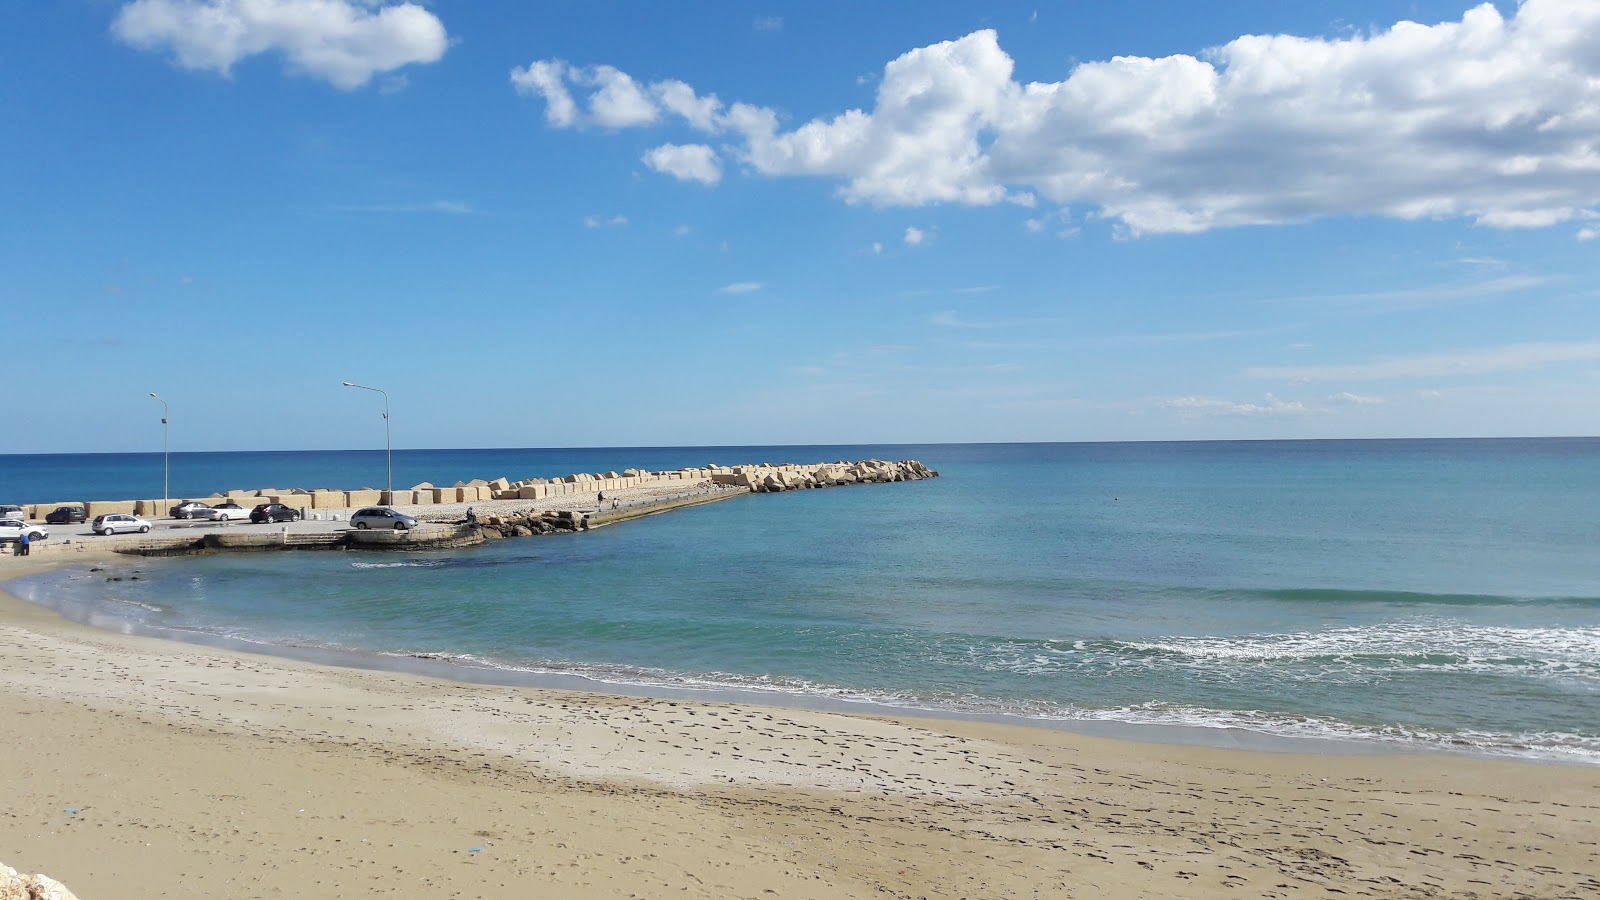 Foto av Spiaggia Di Avola med hög nivå av renlighet